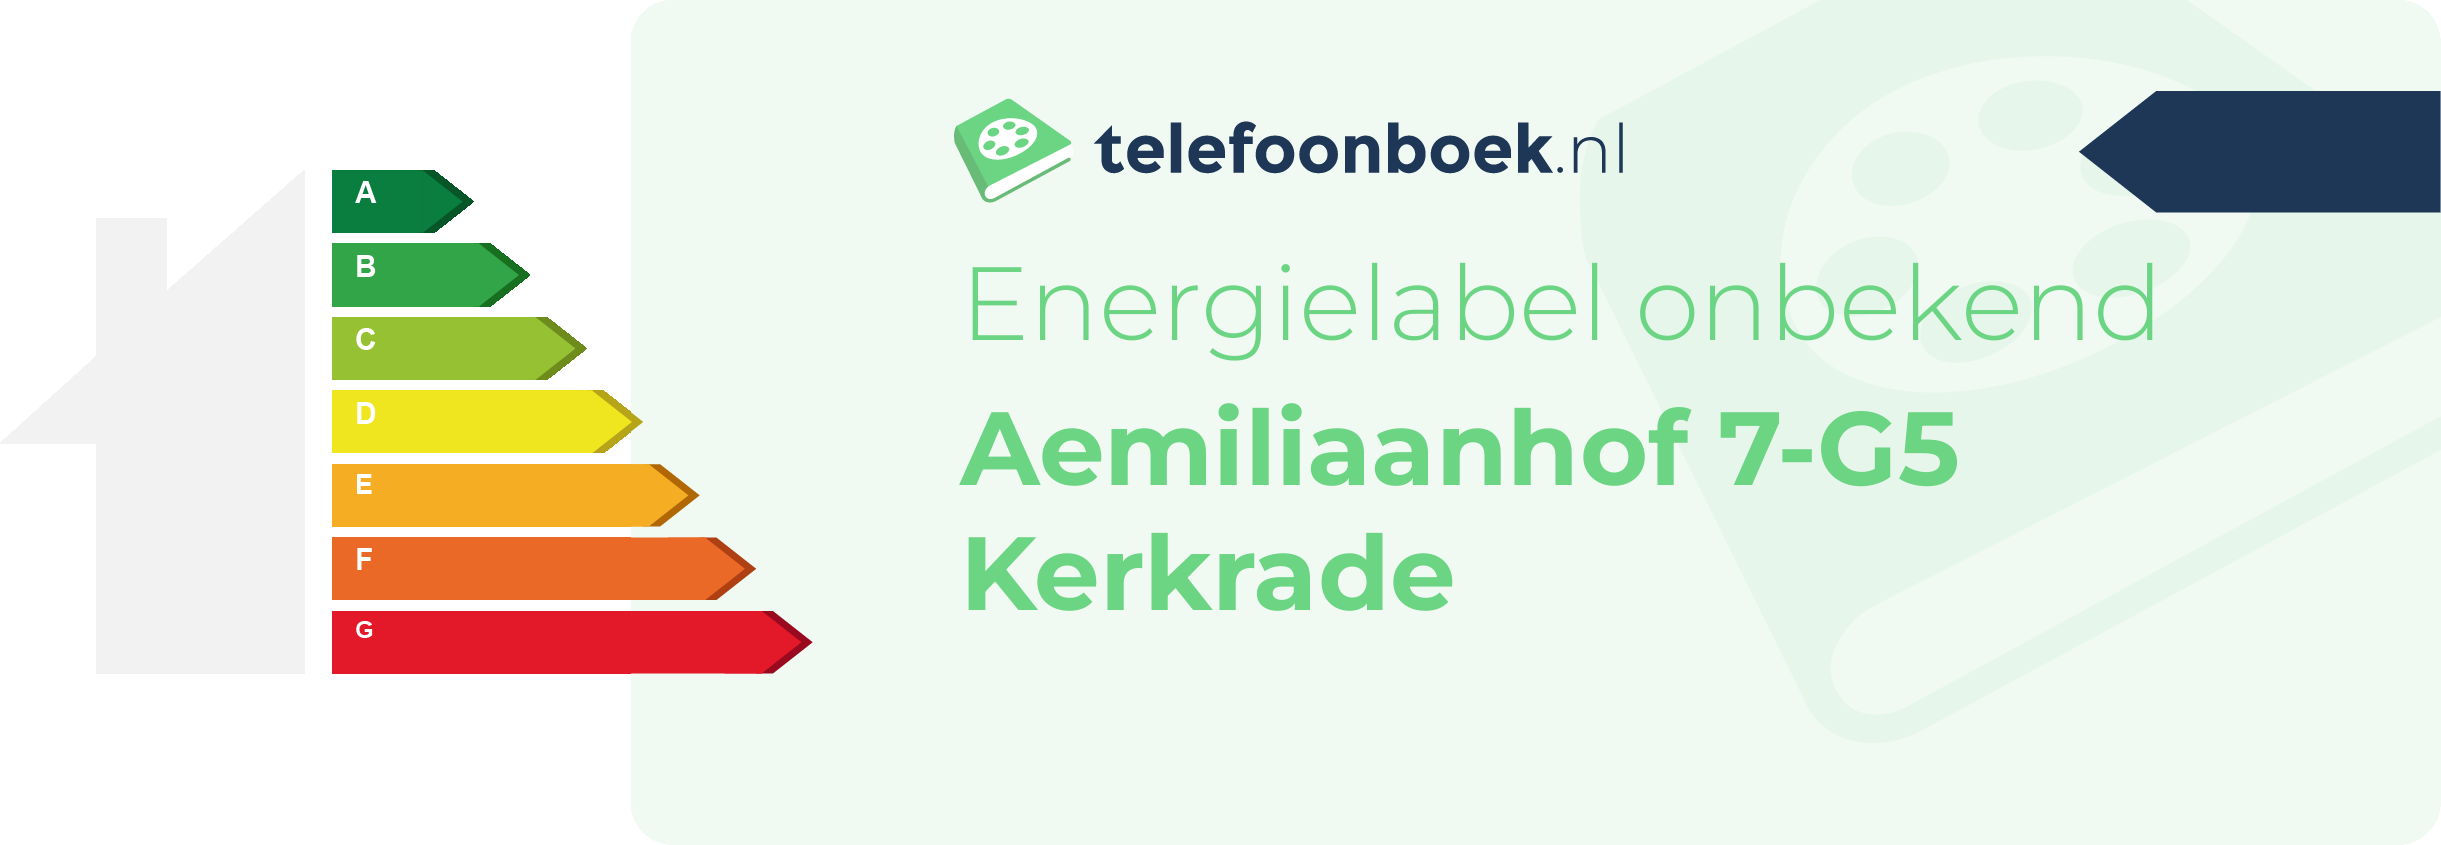 Energielabel Aemiliaanhof 7-G5 Kerkrade